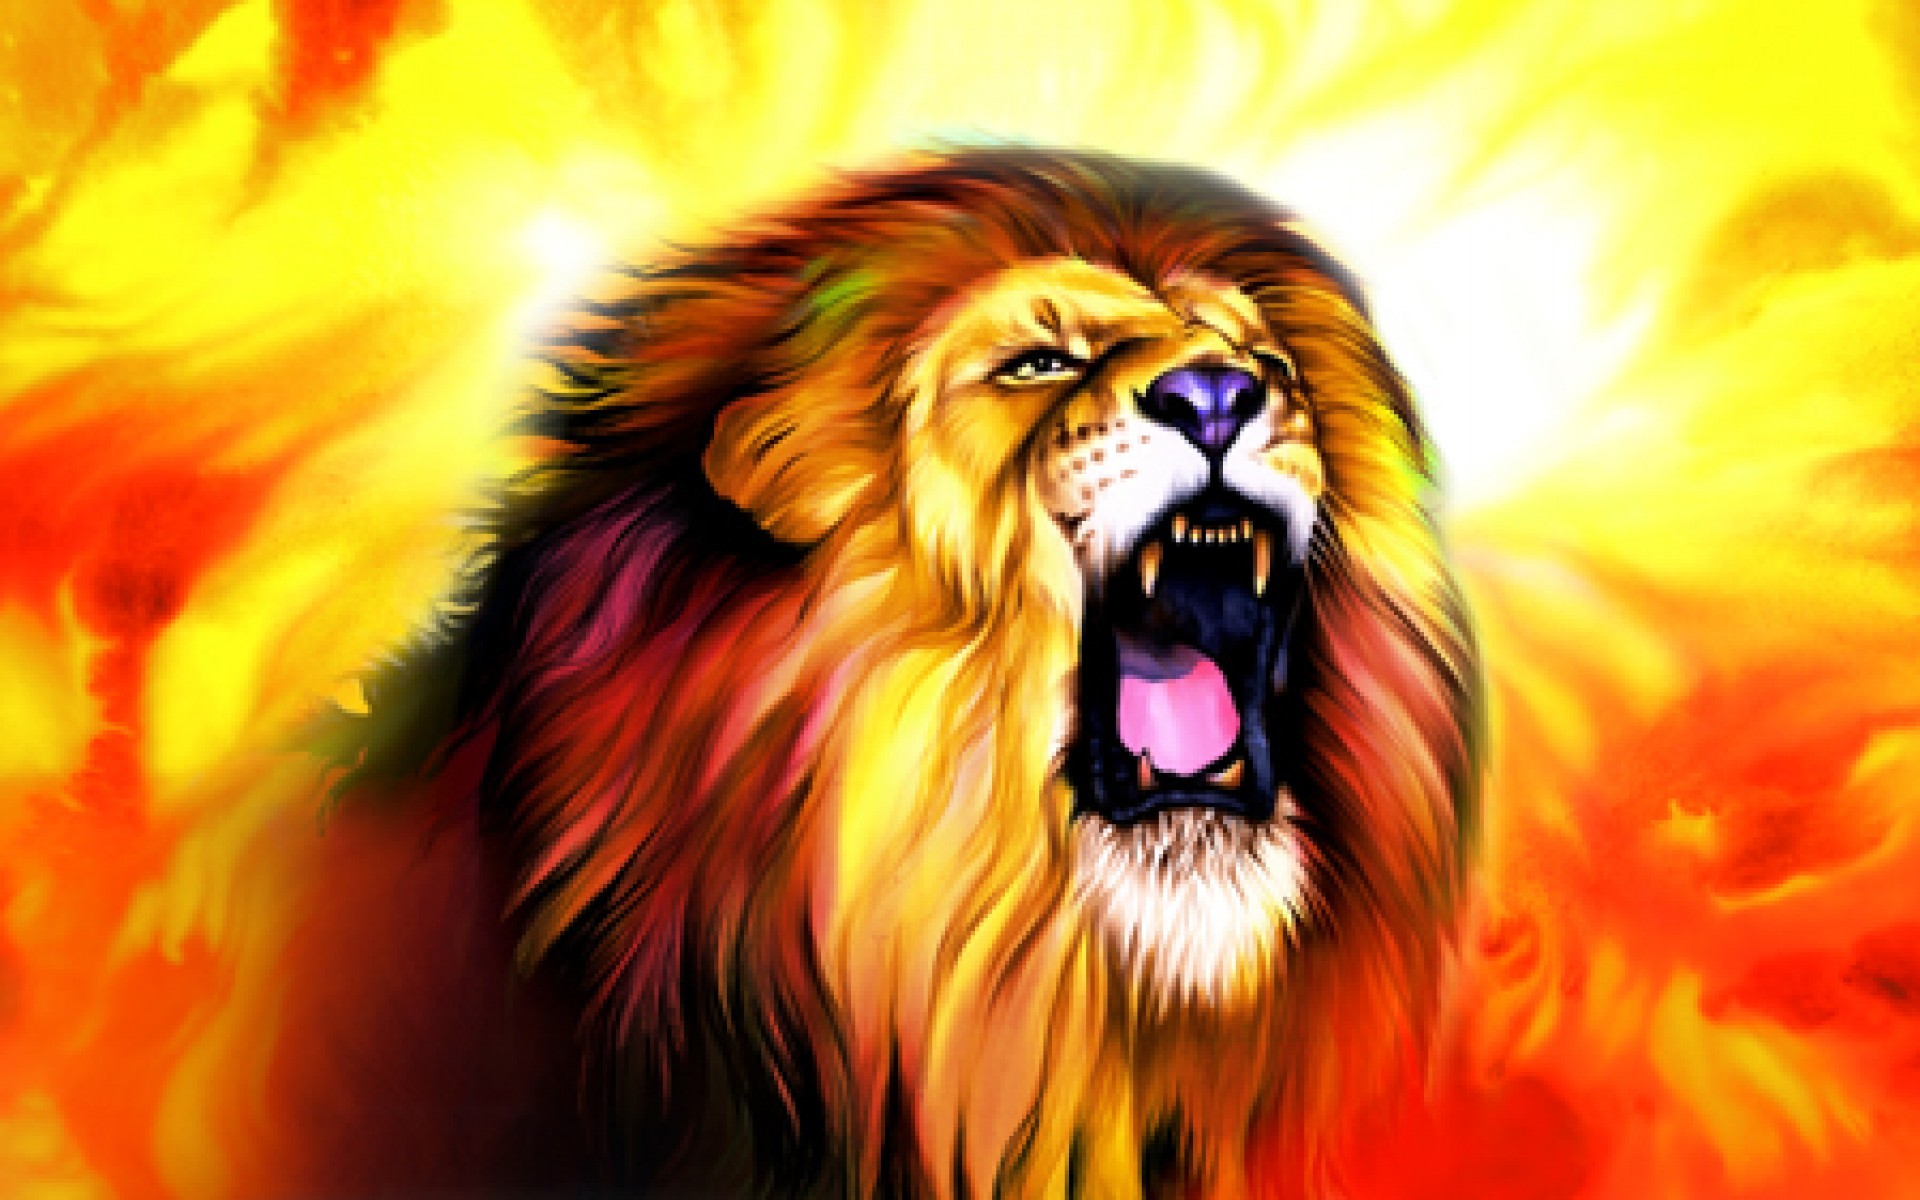  Lion  wallpaper  HD    Download  free  amazing HD  wallpapers  